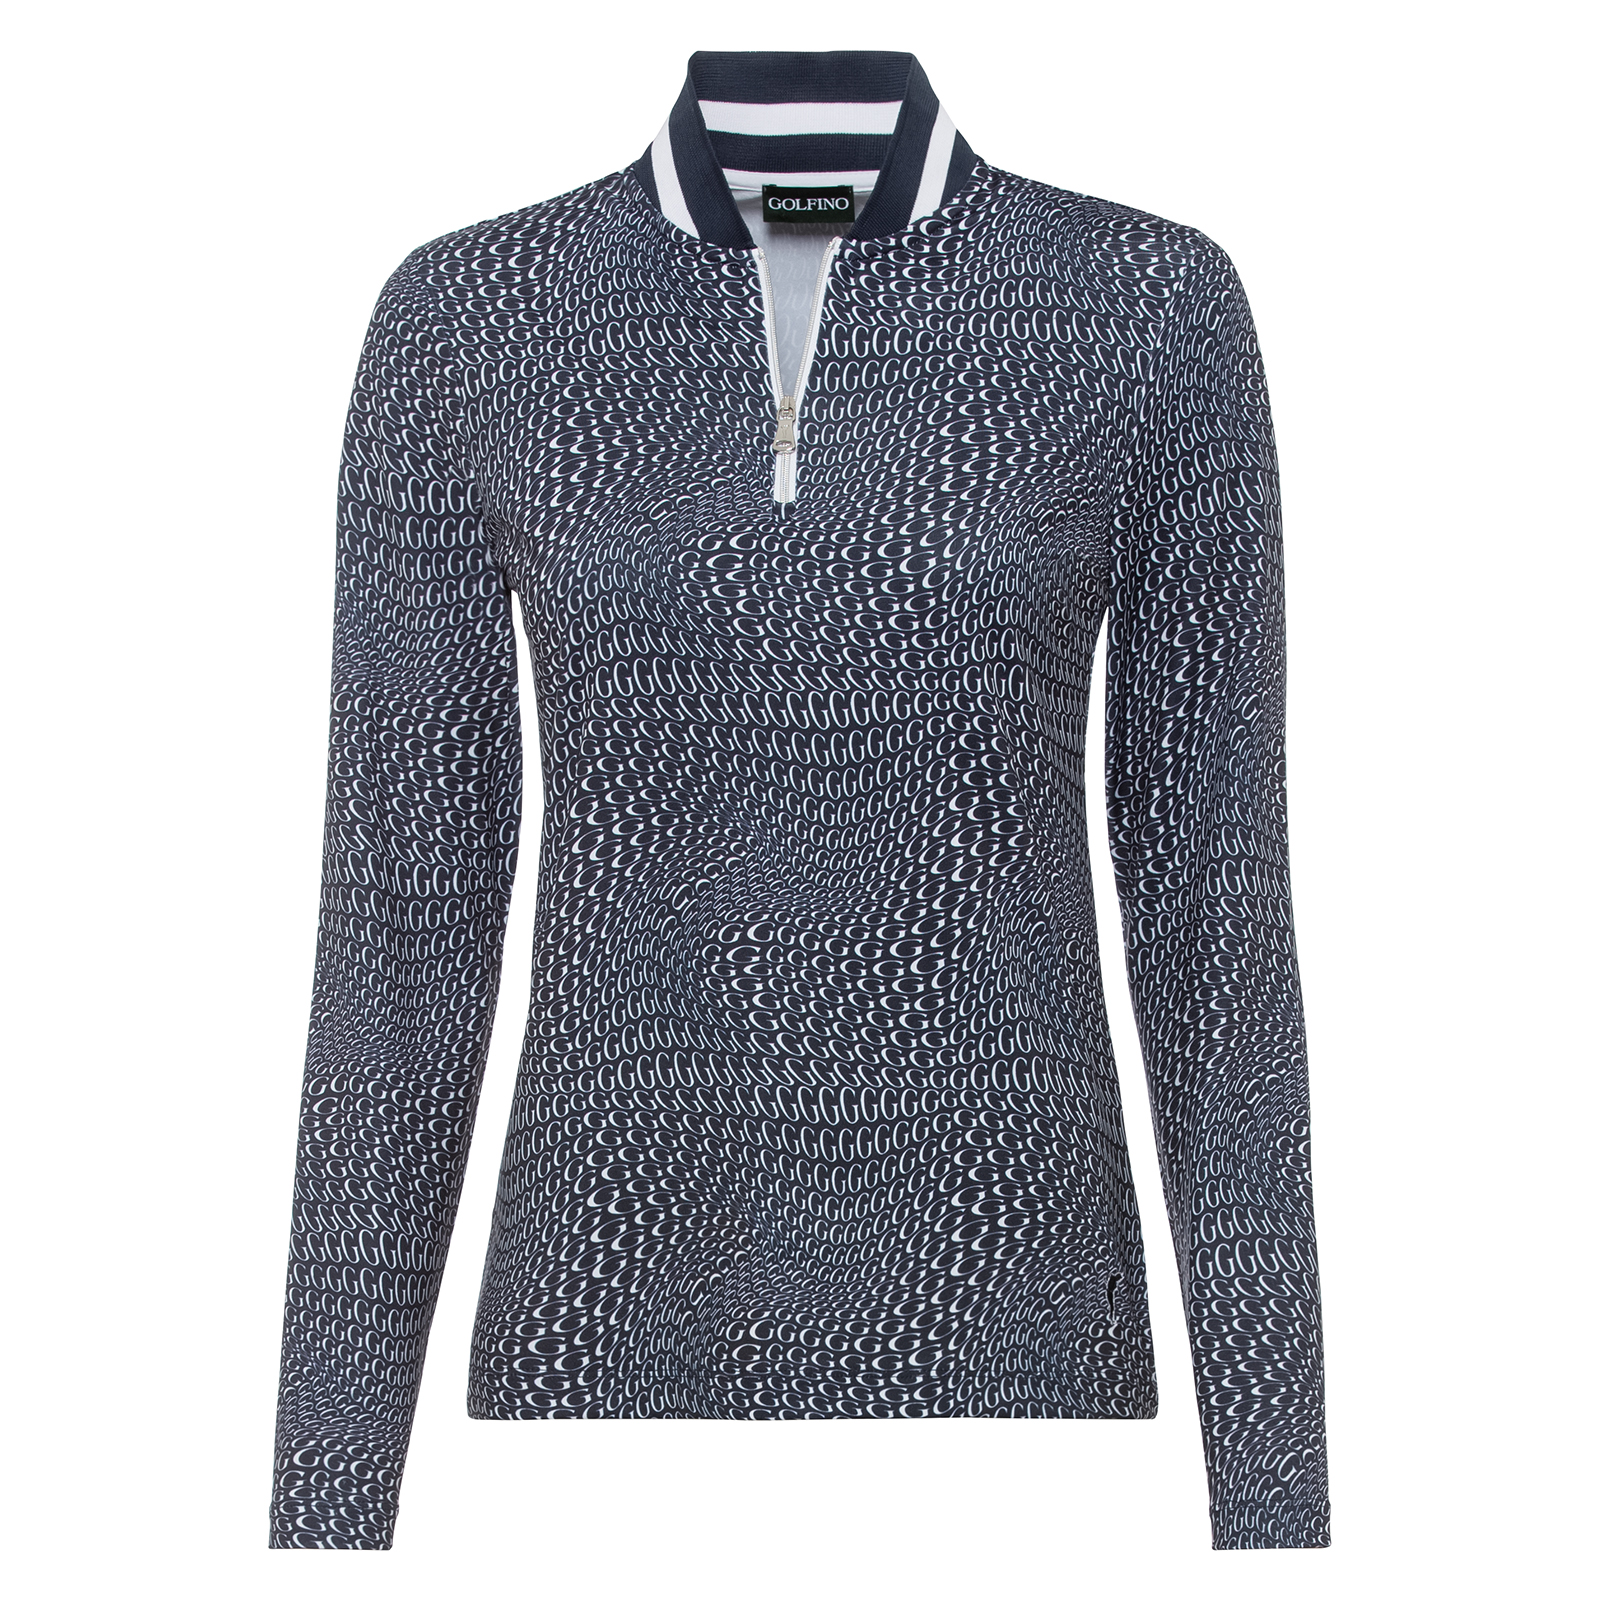 Ladies' elegant half-zip golf sweater with all-over print